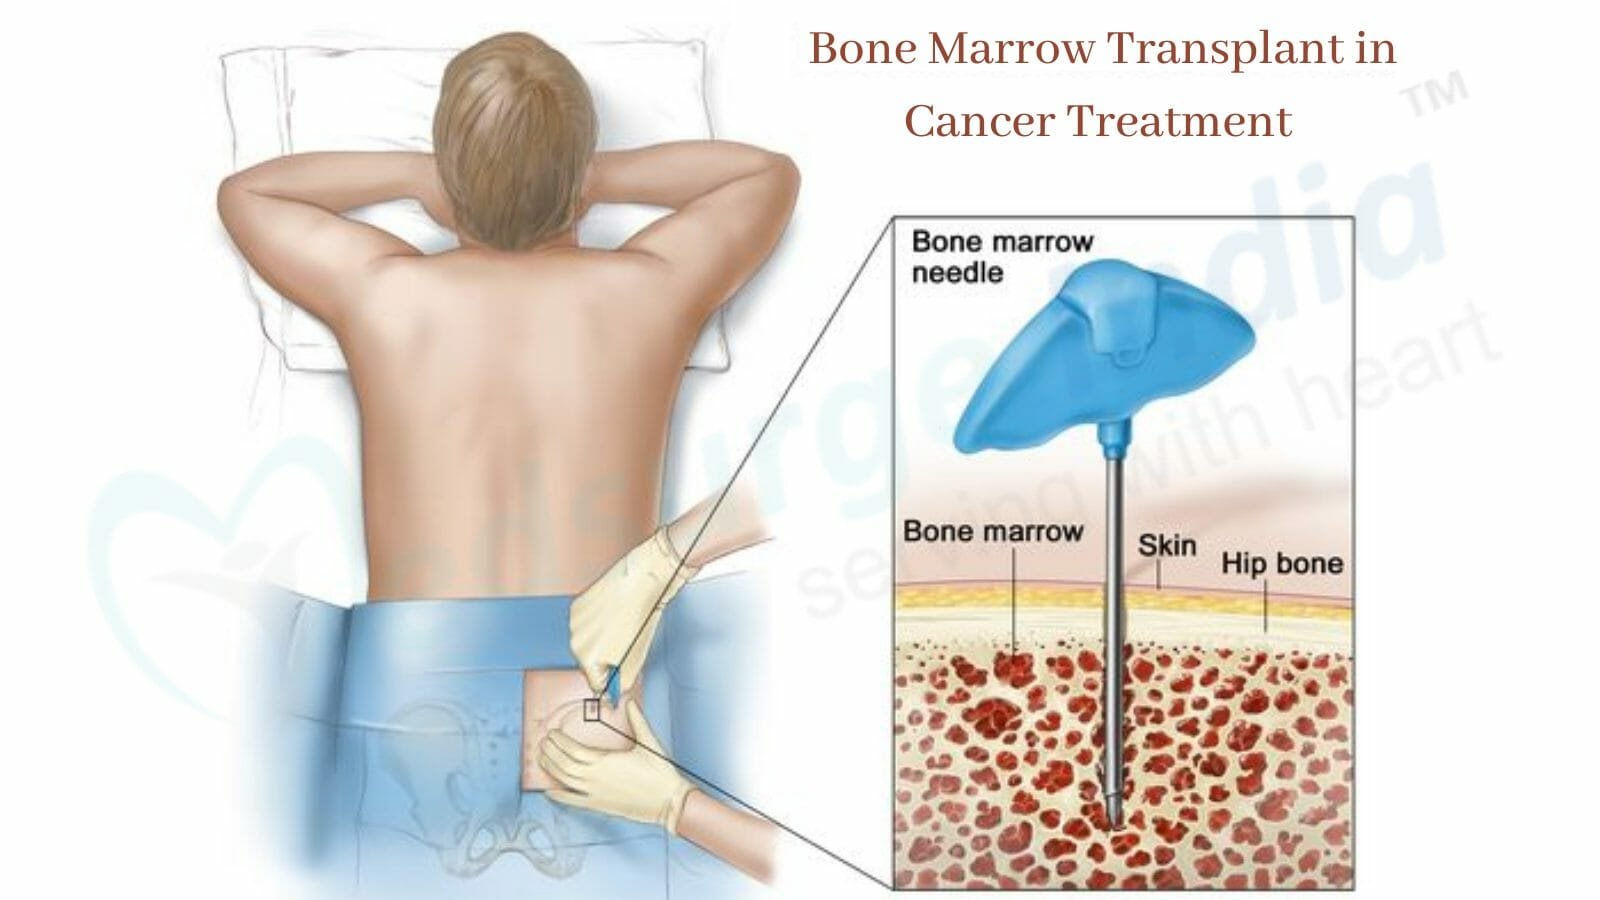 Role of Bone Marrow Transplant in Cancer Treatment